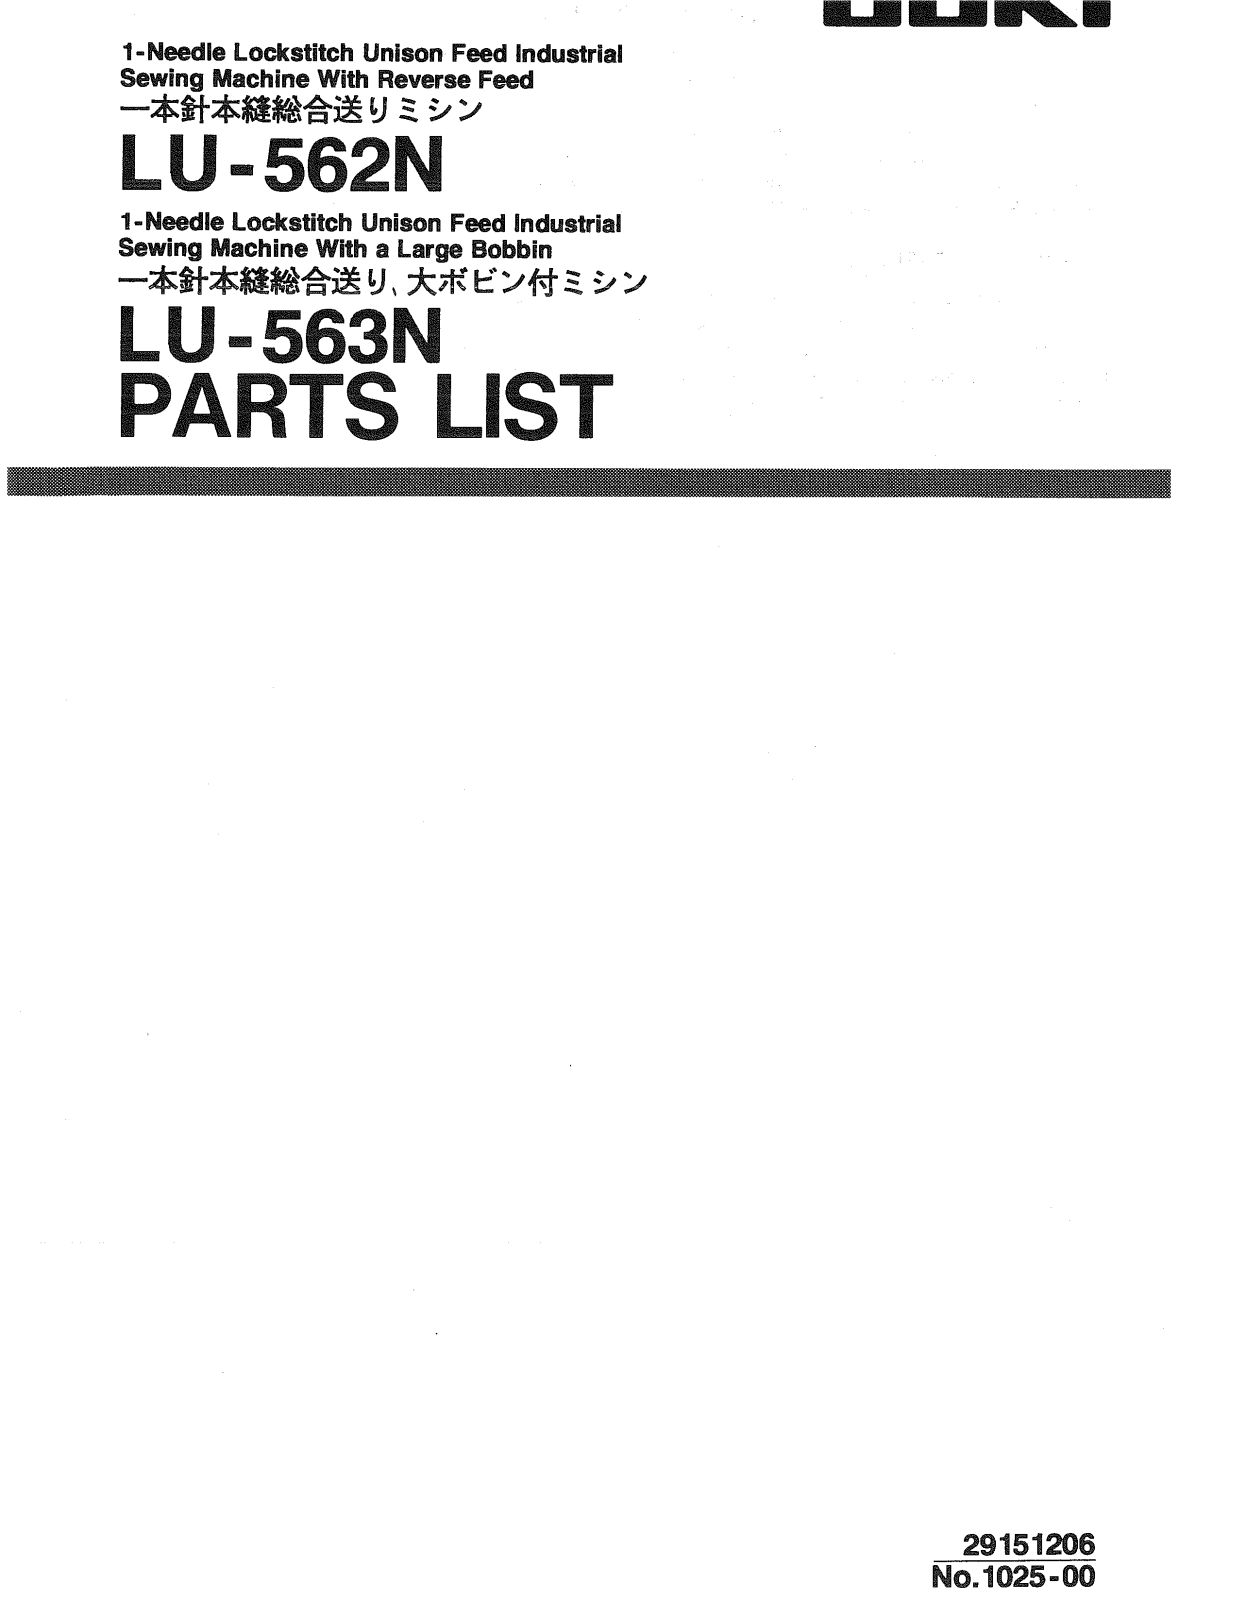 Juki LU-563N Parts List